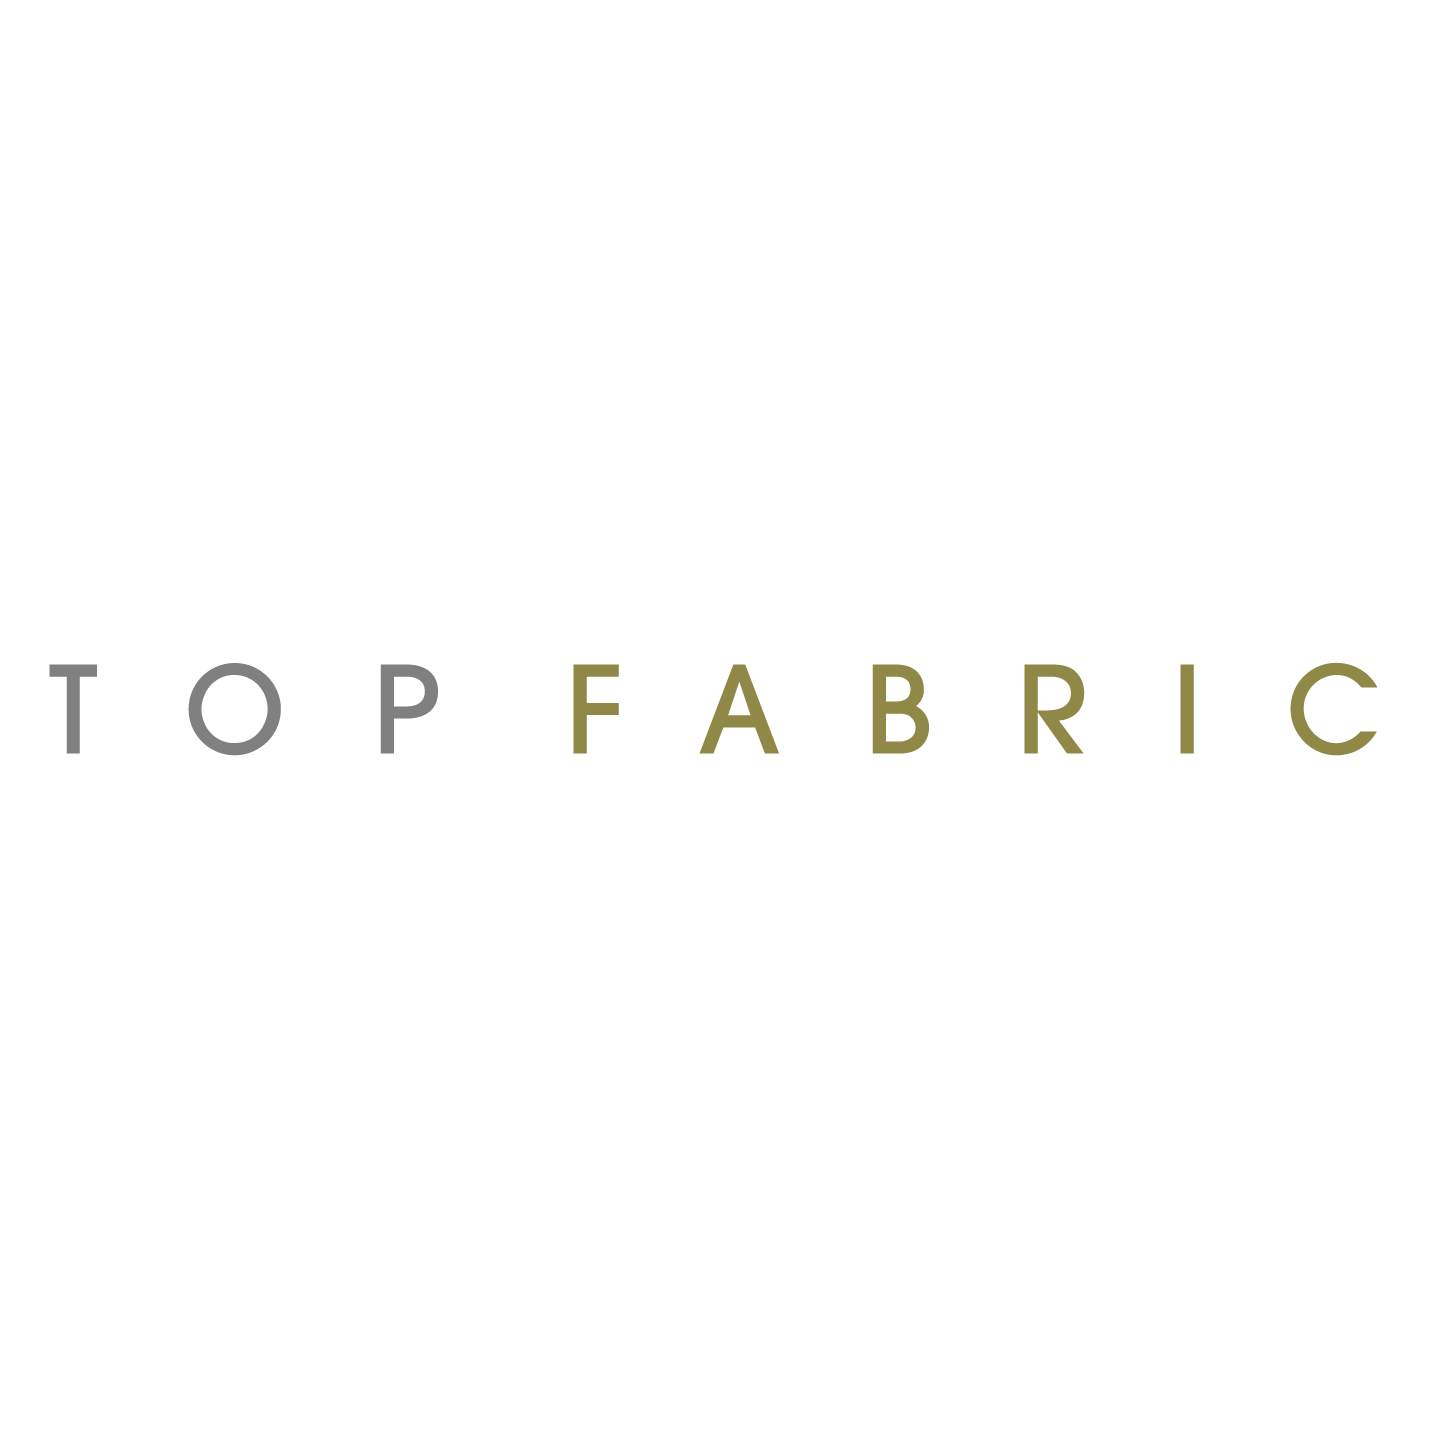 Download Buy fabric online - Dragon Scale Sequin in Iridescent ...